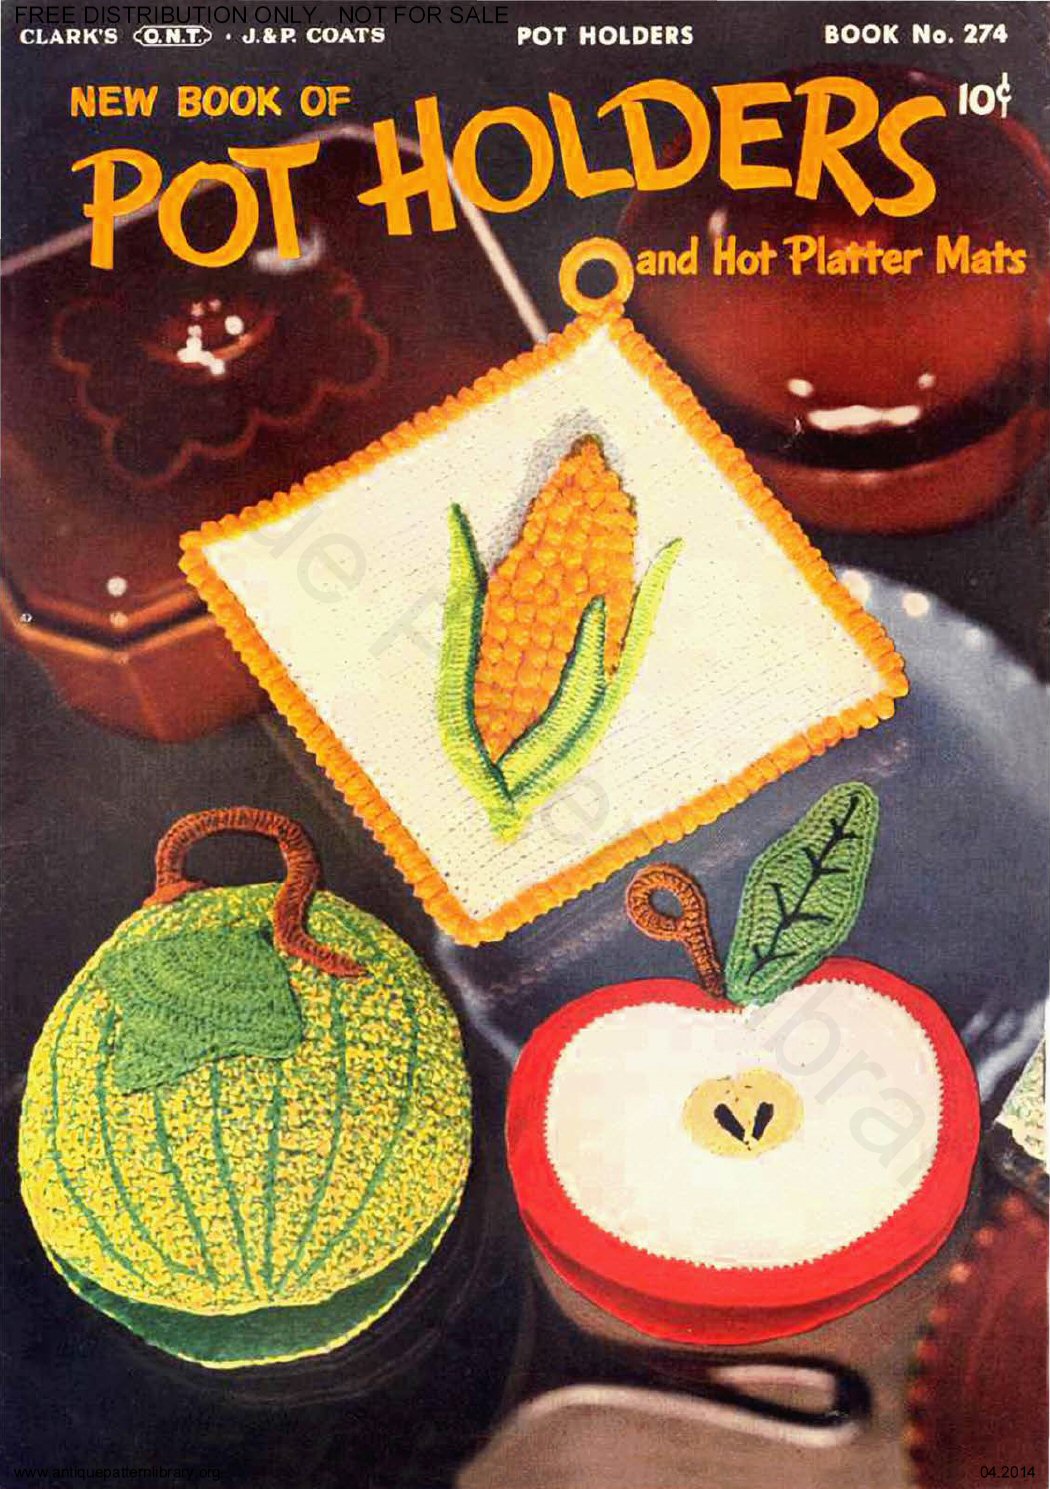 B-JA120 New Book of Pot Holders and Hot Platter Mats, Book No. 274